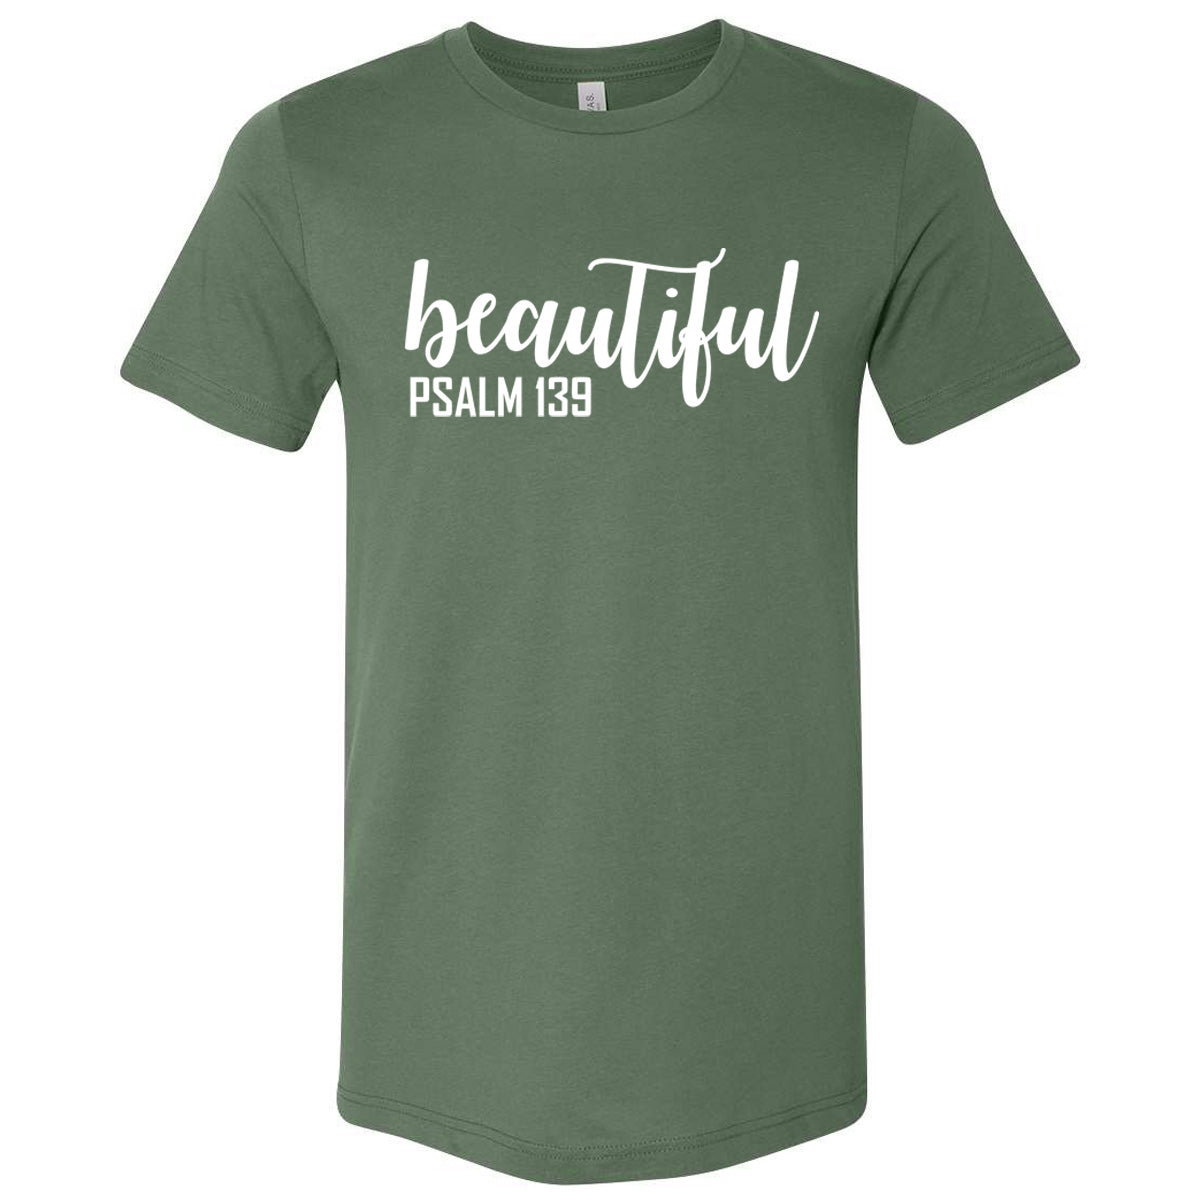 "Beautiful" (Psalm 139) Tee - Pine Short Sleeves Tee